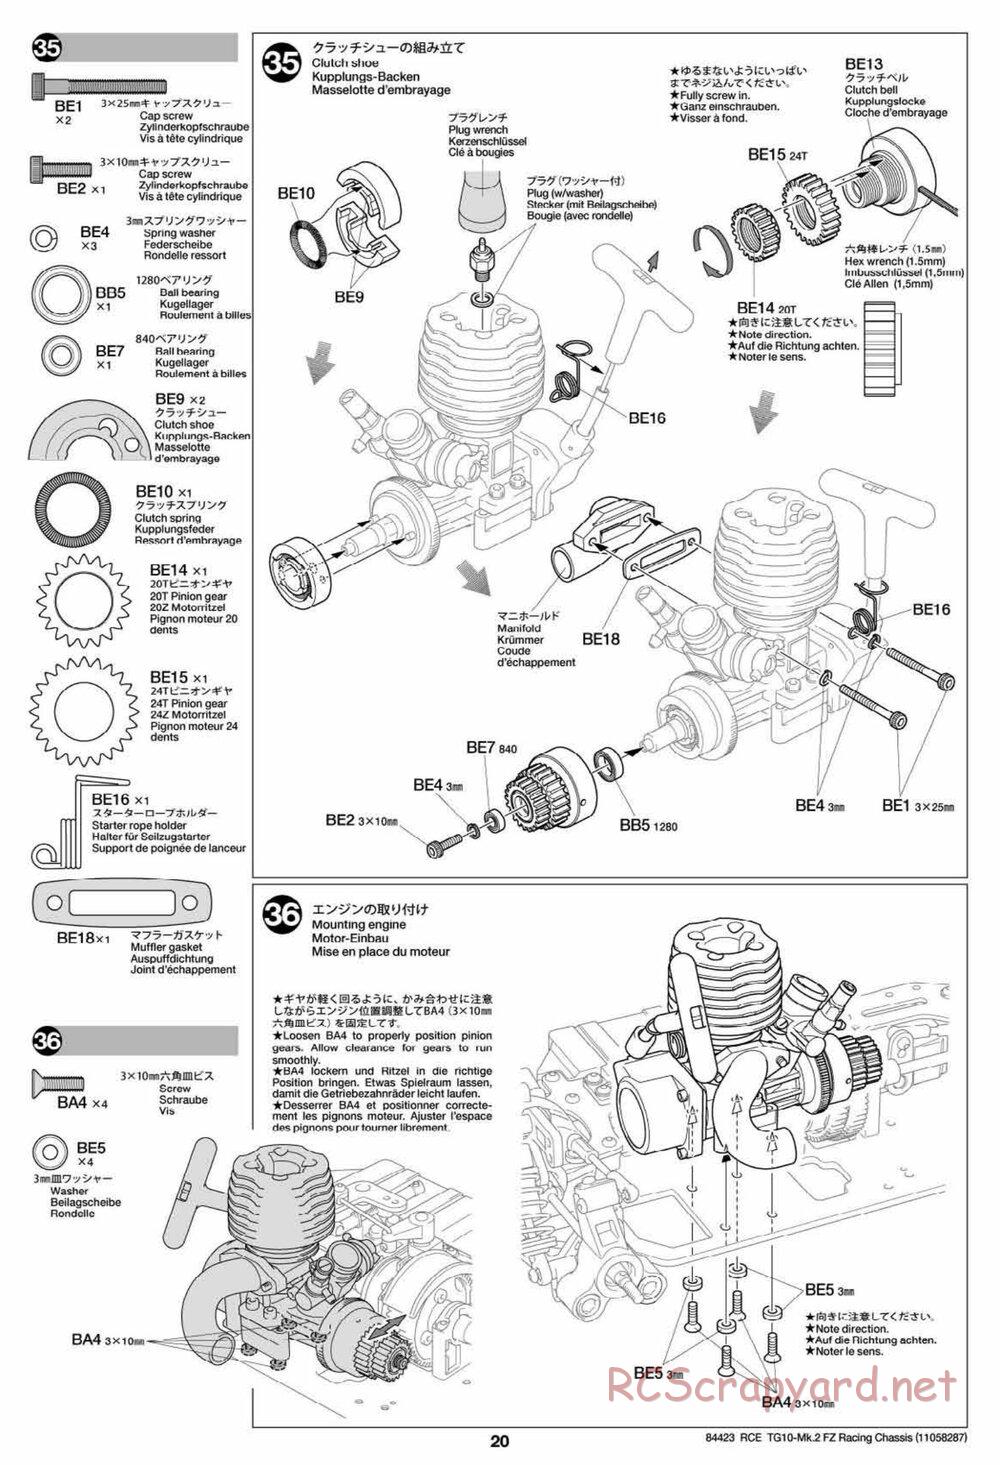 Tamiya - TG10 Mk.2 FZ Racing Chassis - Manual - Page 20